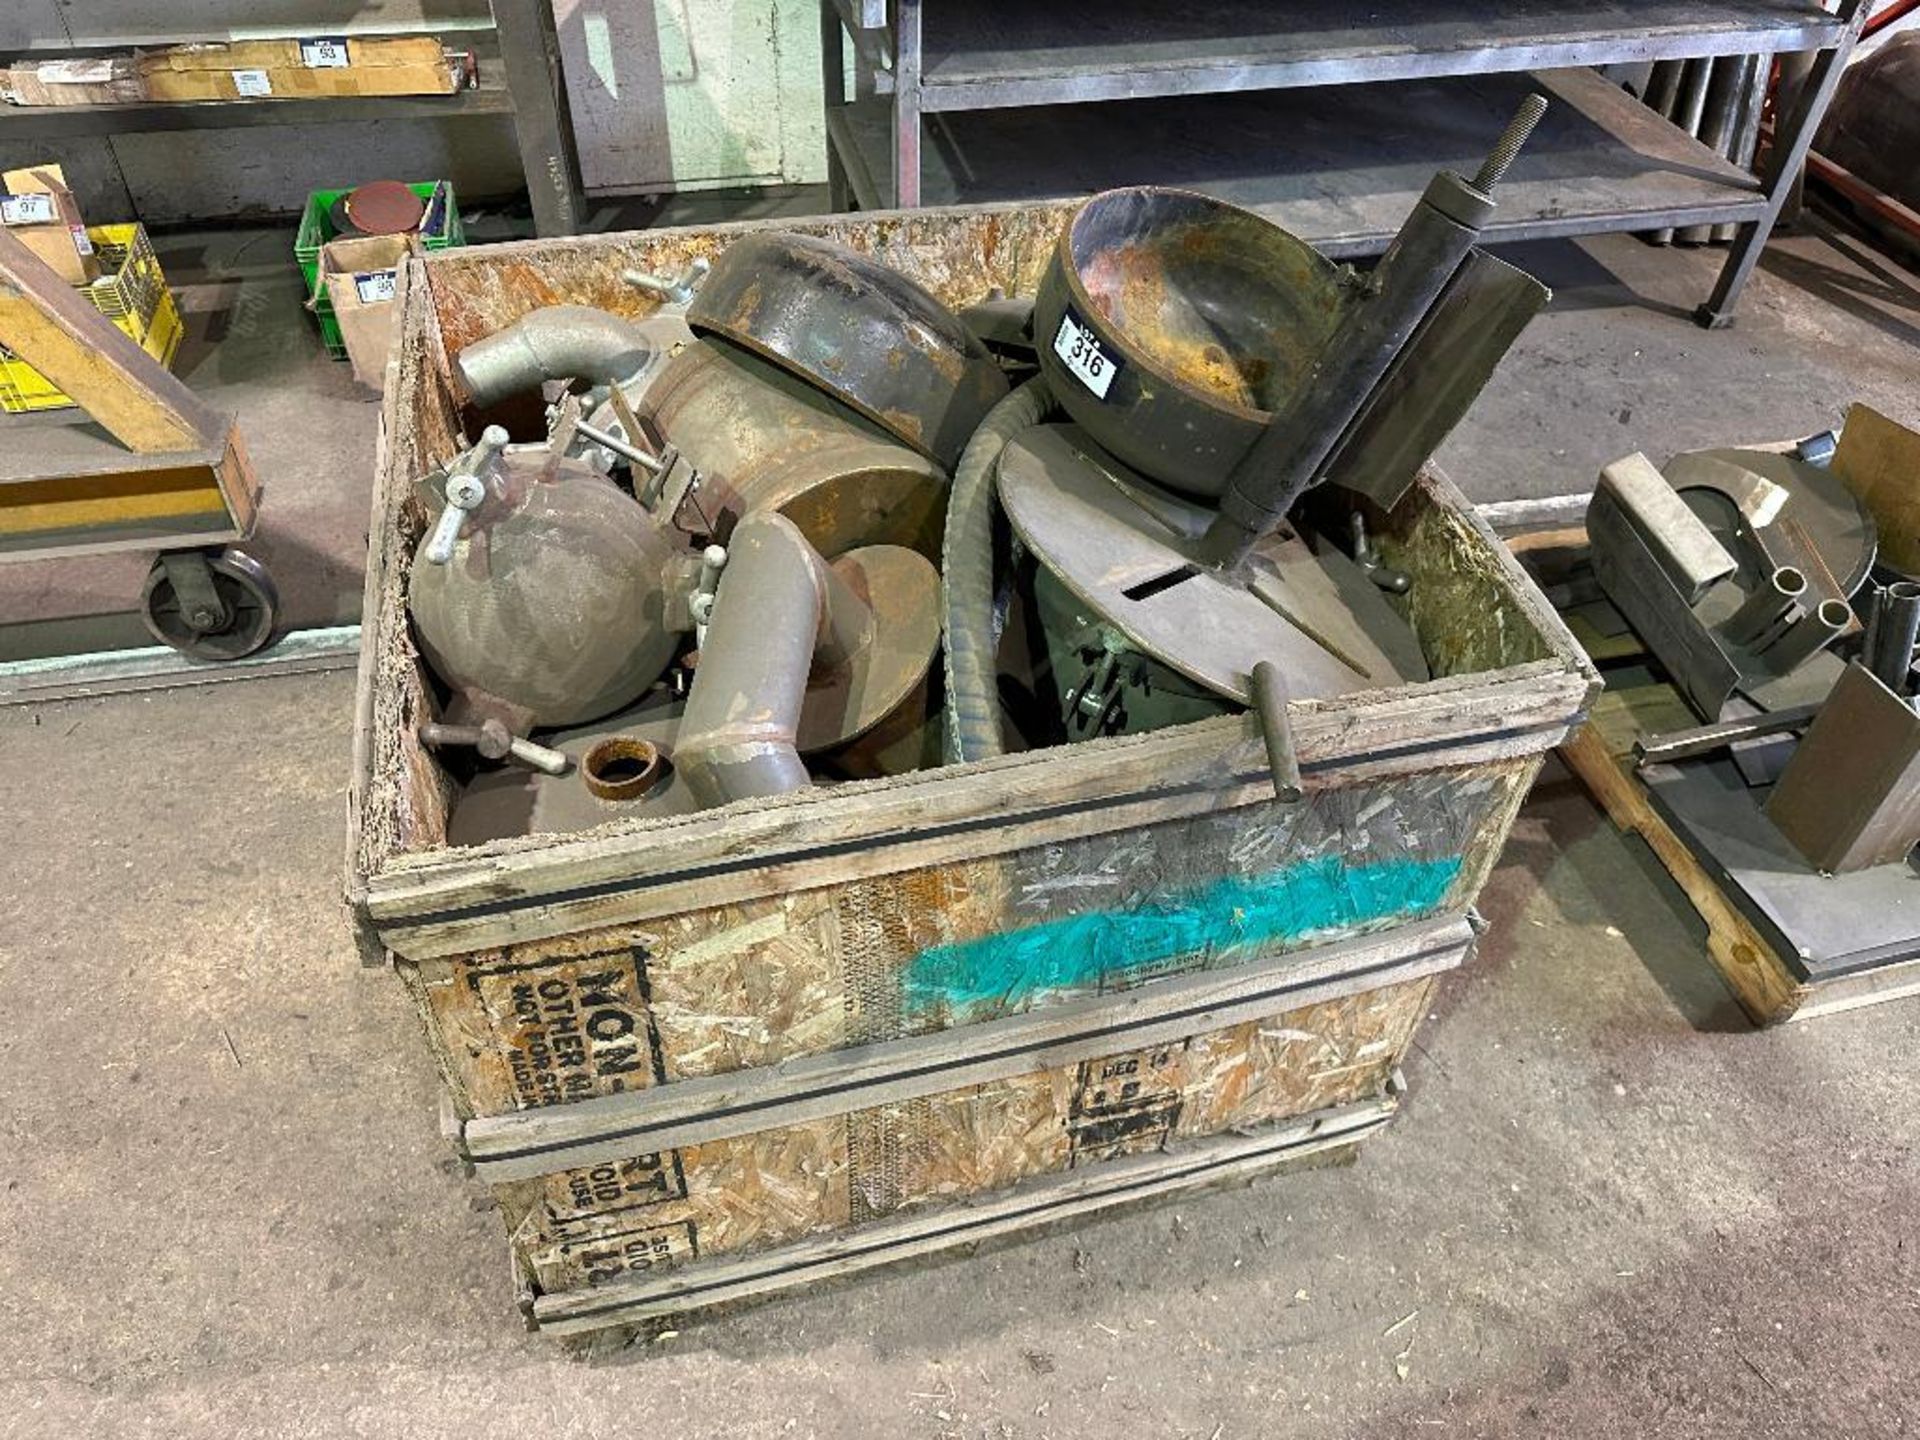 Crate of Asst. Steel Parts, Hose, etc.